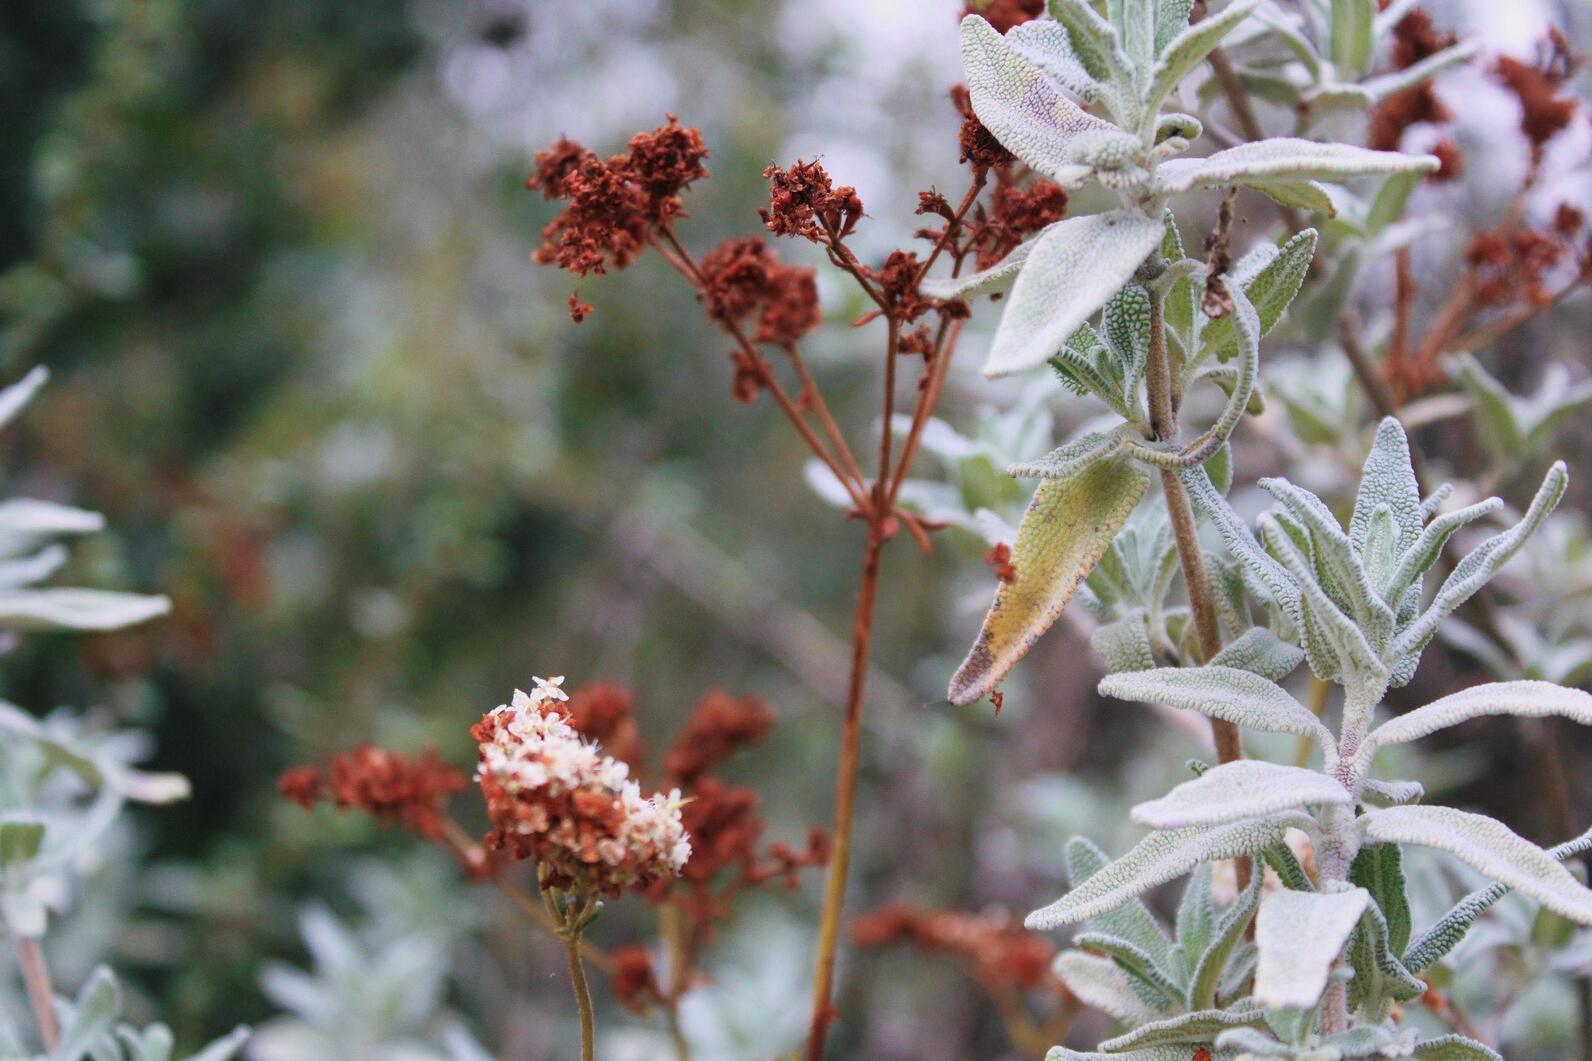 California buckwheat (Eriogonum fasciculatum) with rust-brown flowers in the winter.